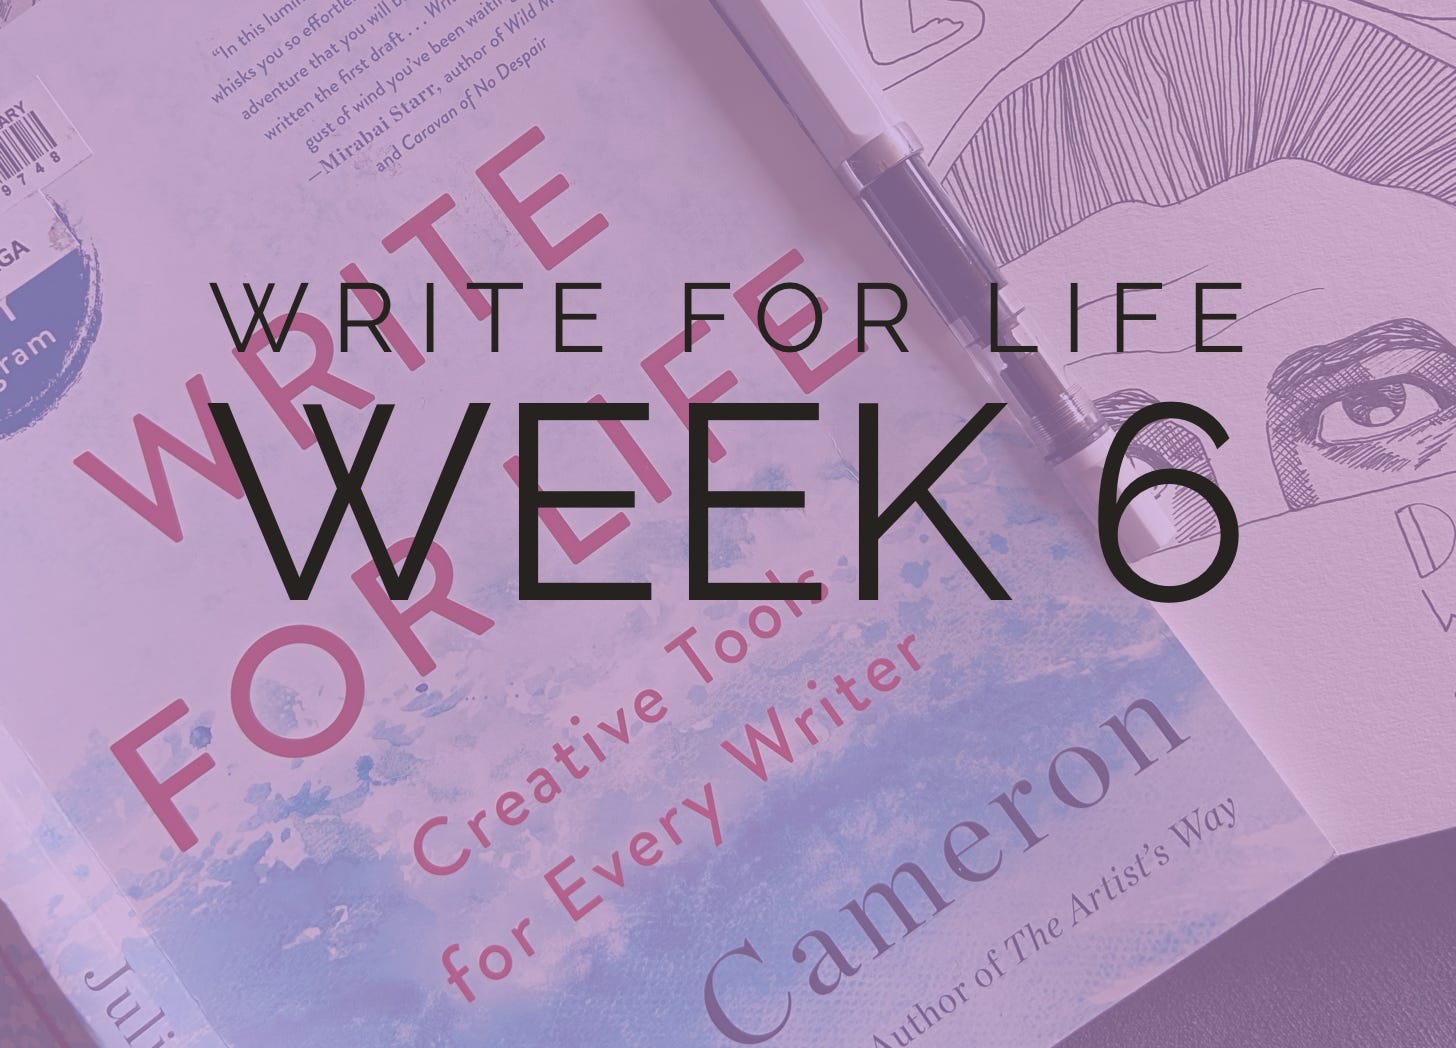 Julia Cameron's Write for Life Week 6